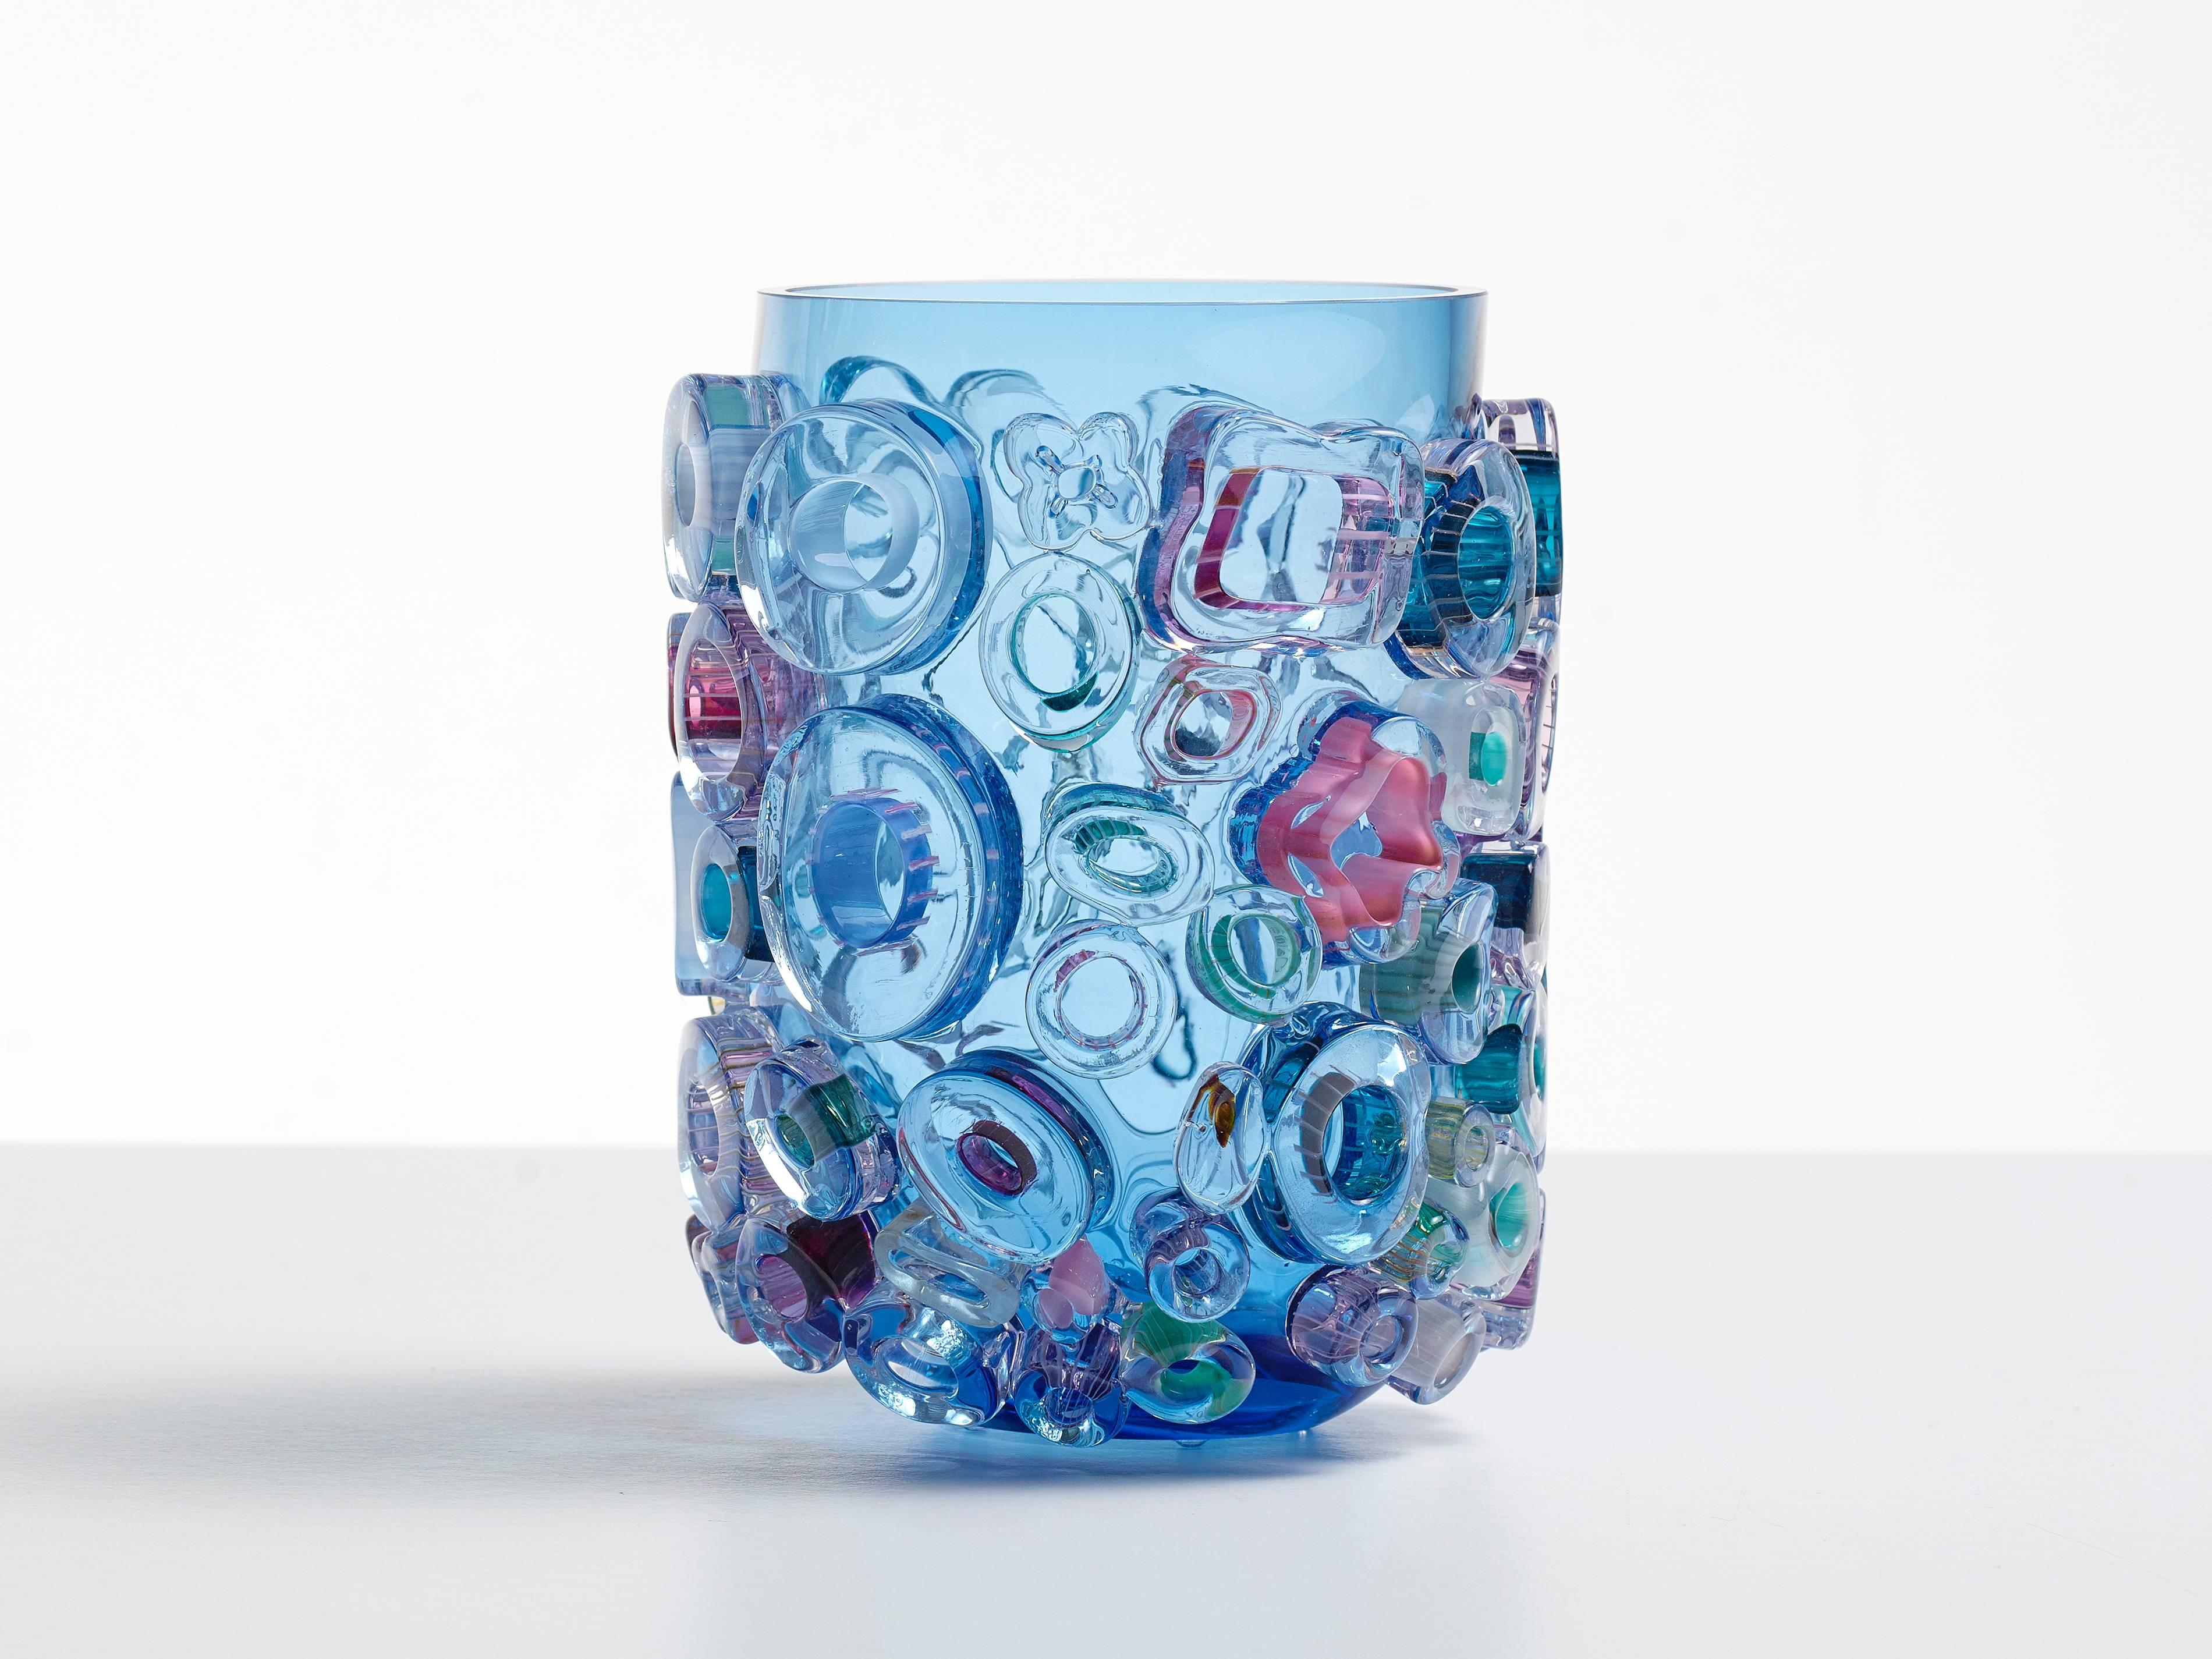 Sabine Lintzen Figurative Sculpture - Murano glass style blue vase. Blue blown glass vessel with glass ornaments